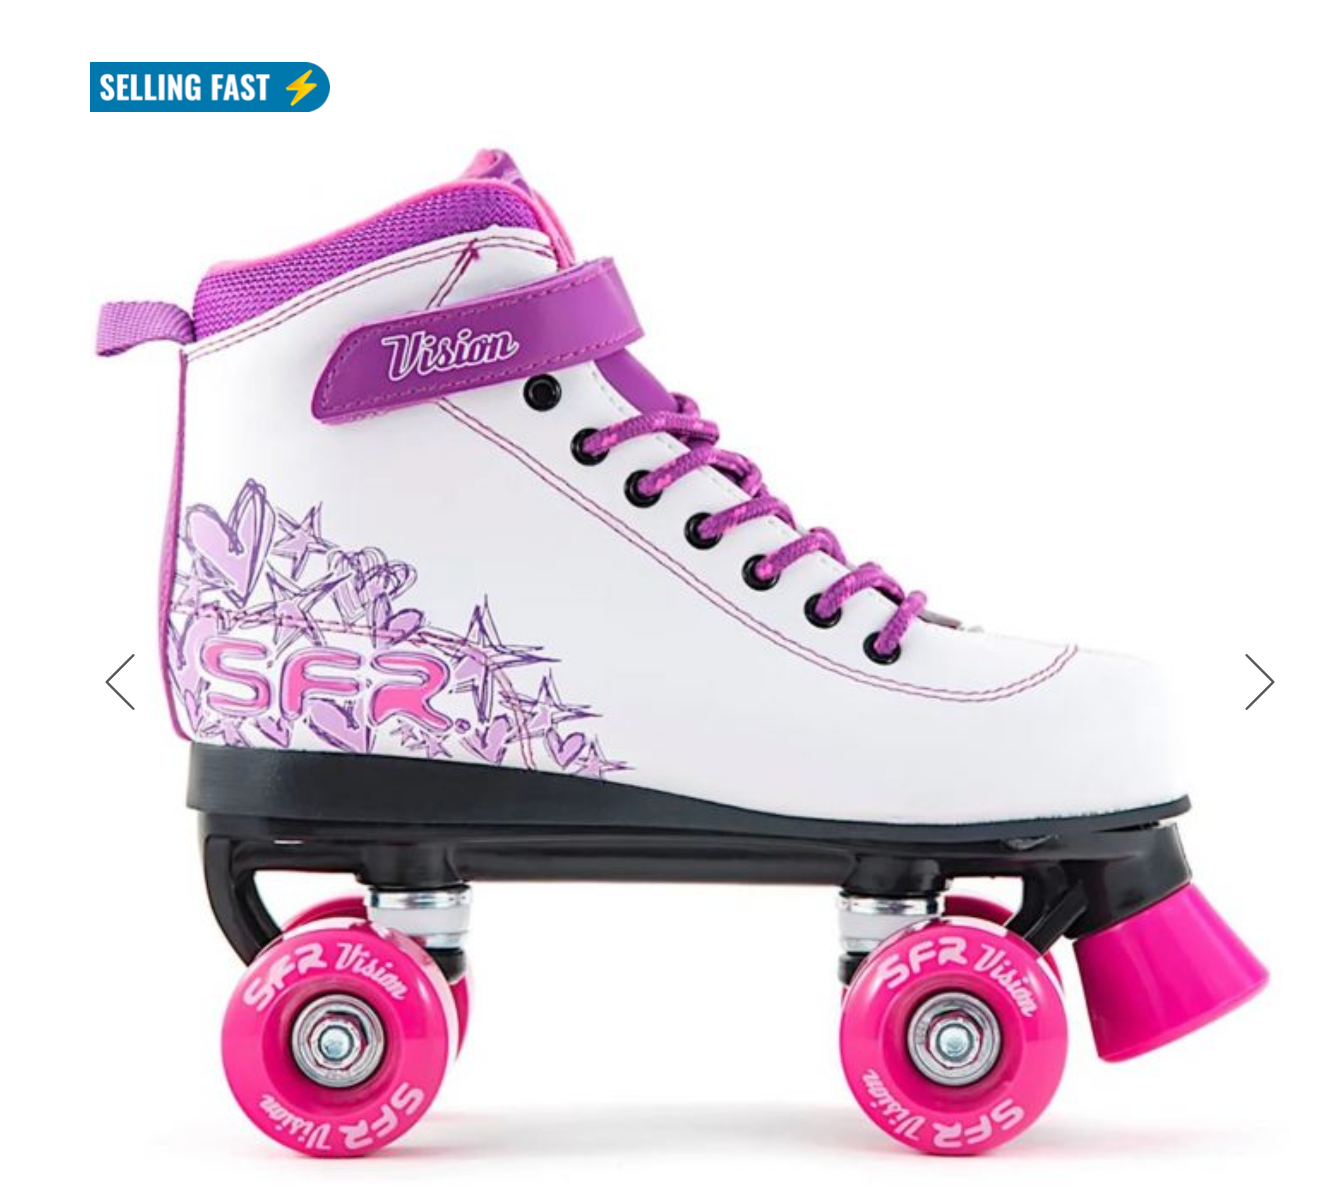 SFR Vision II Roller Quad Skate White/Purple